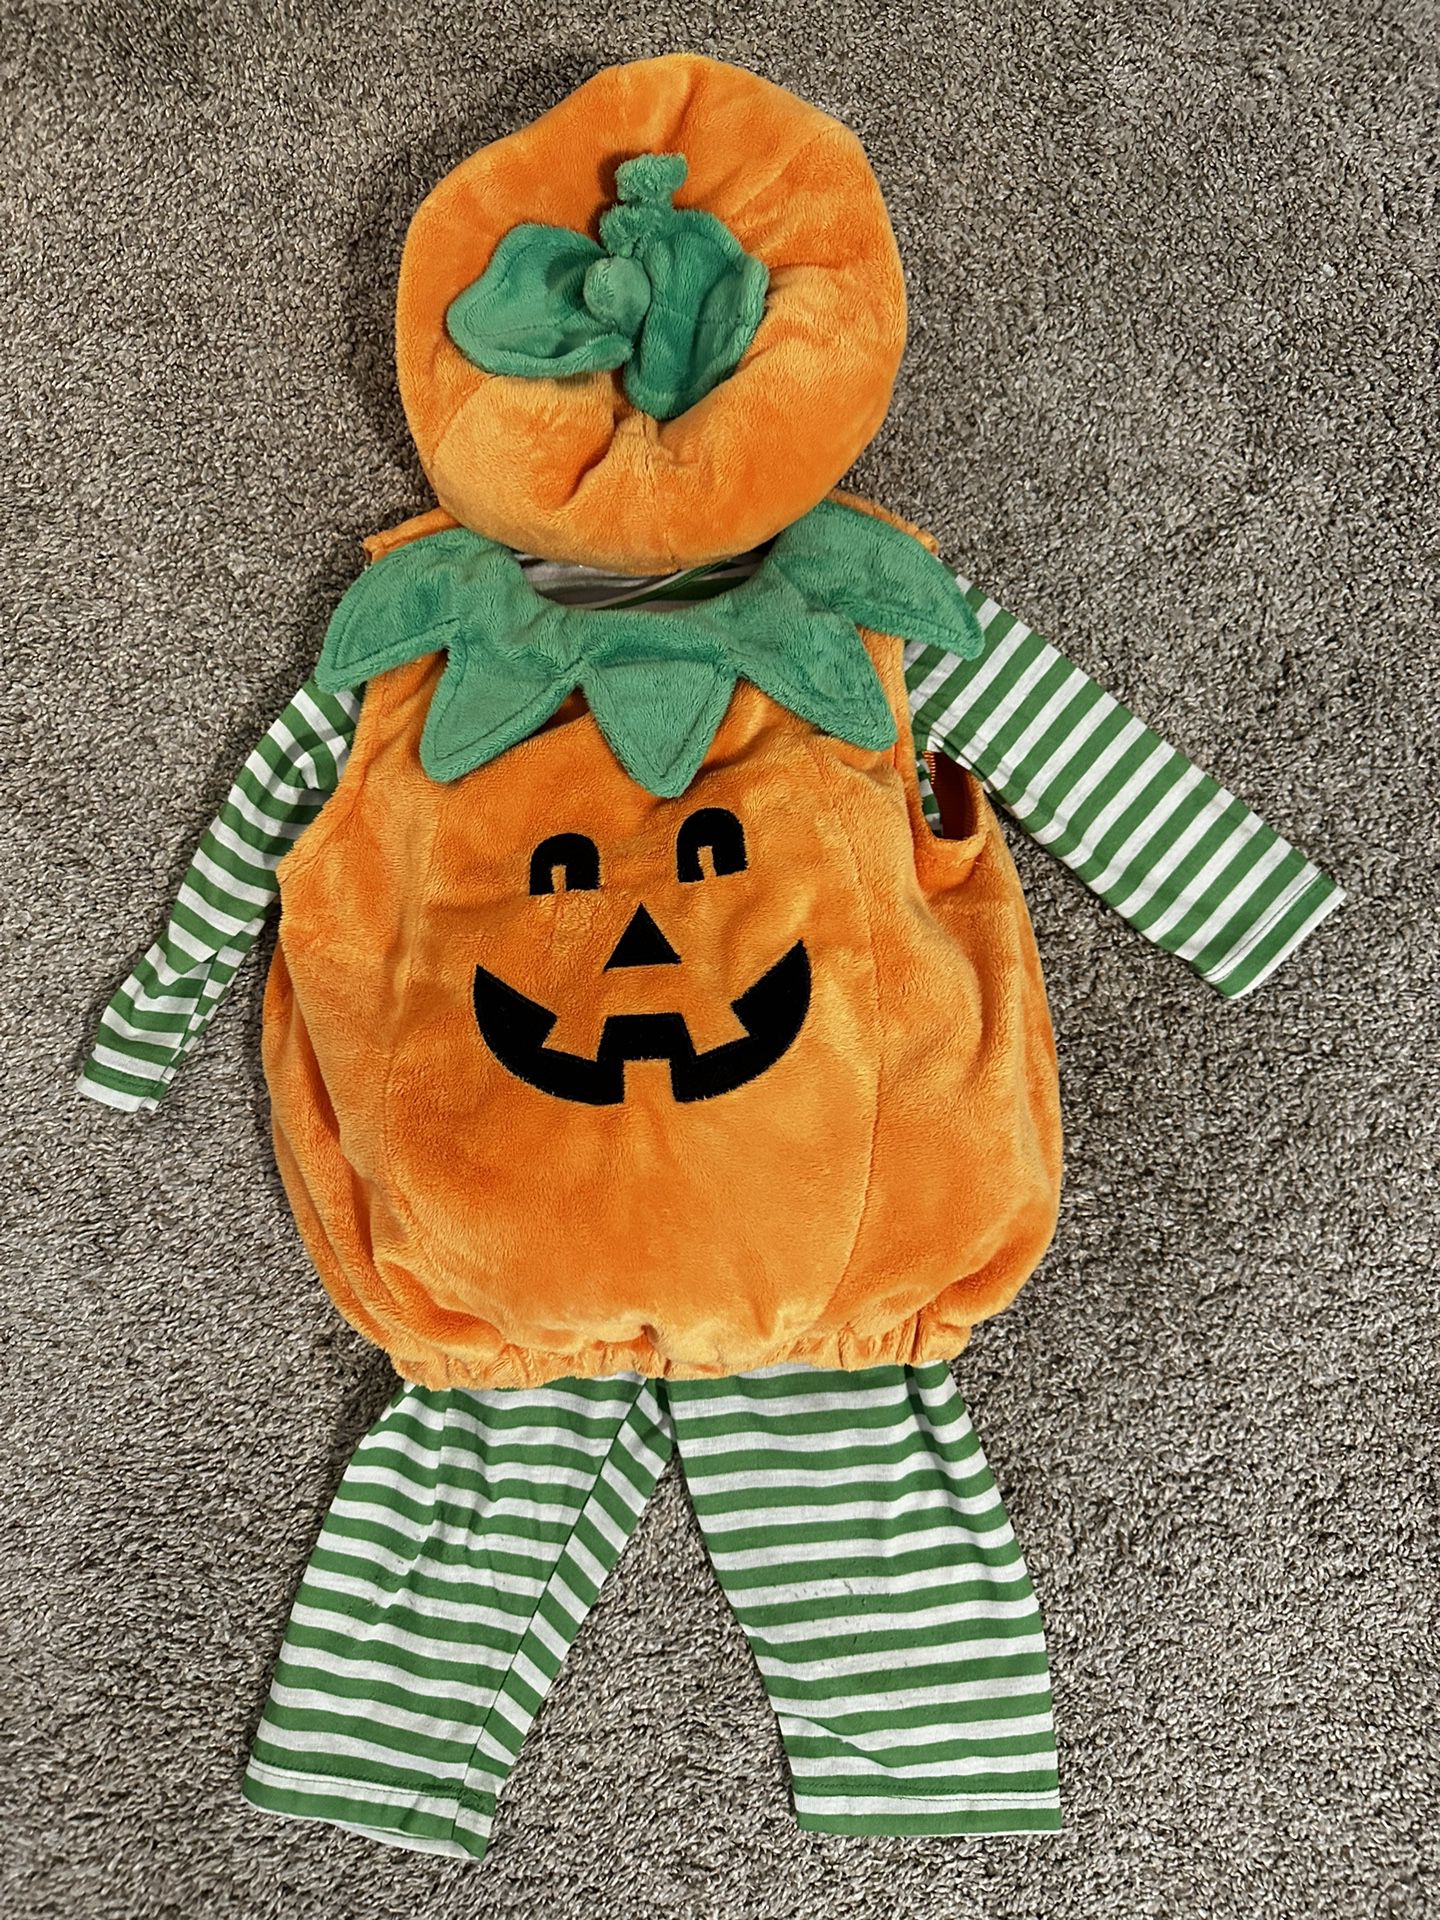 halloween costume for child